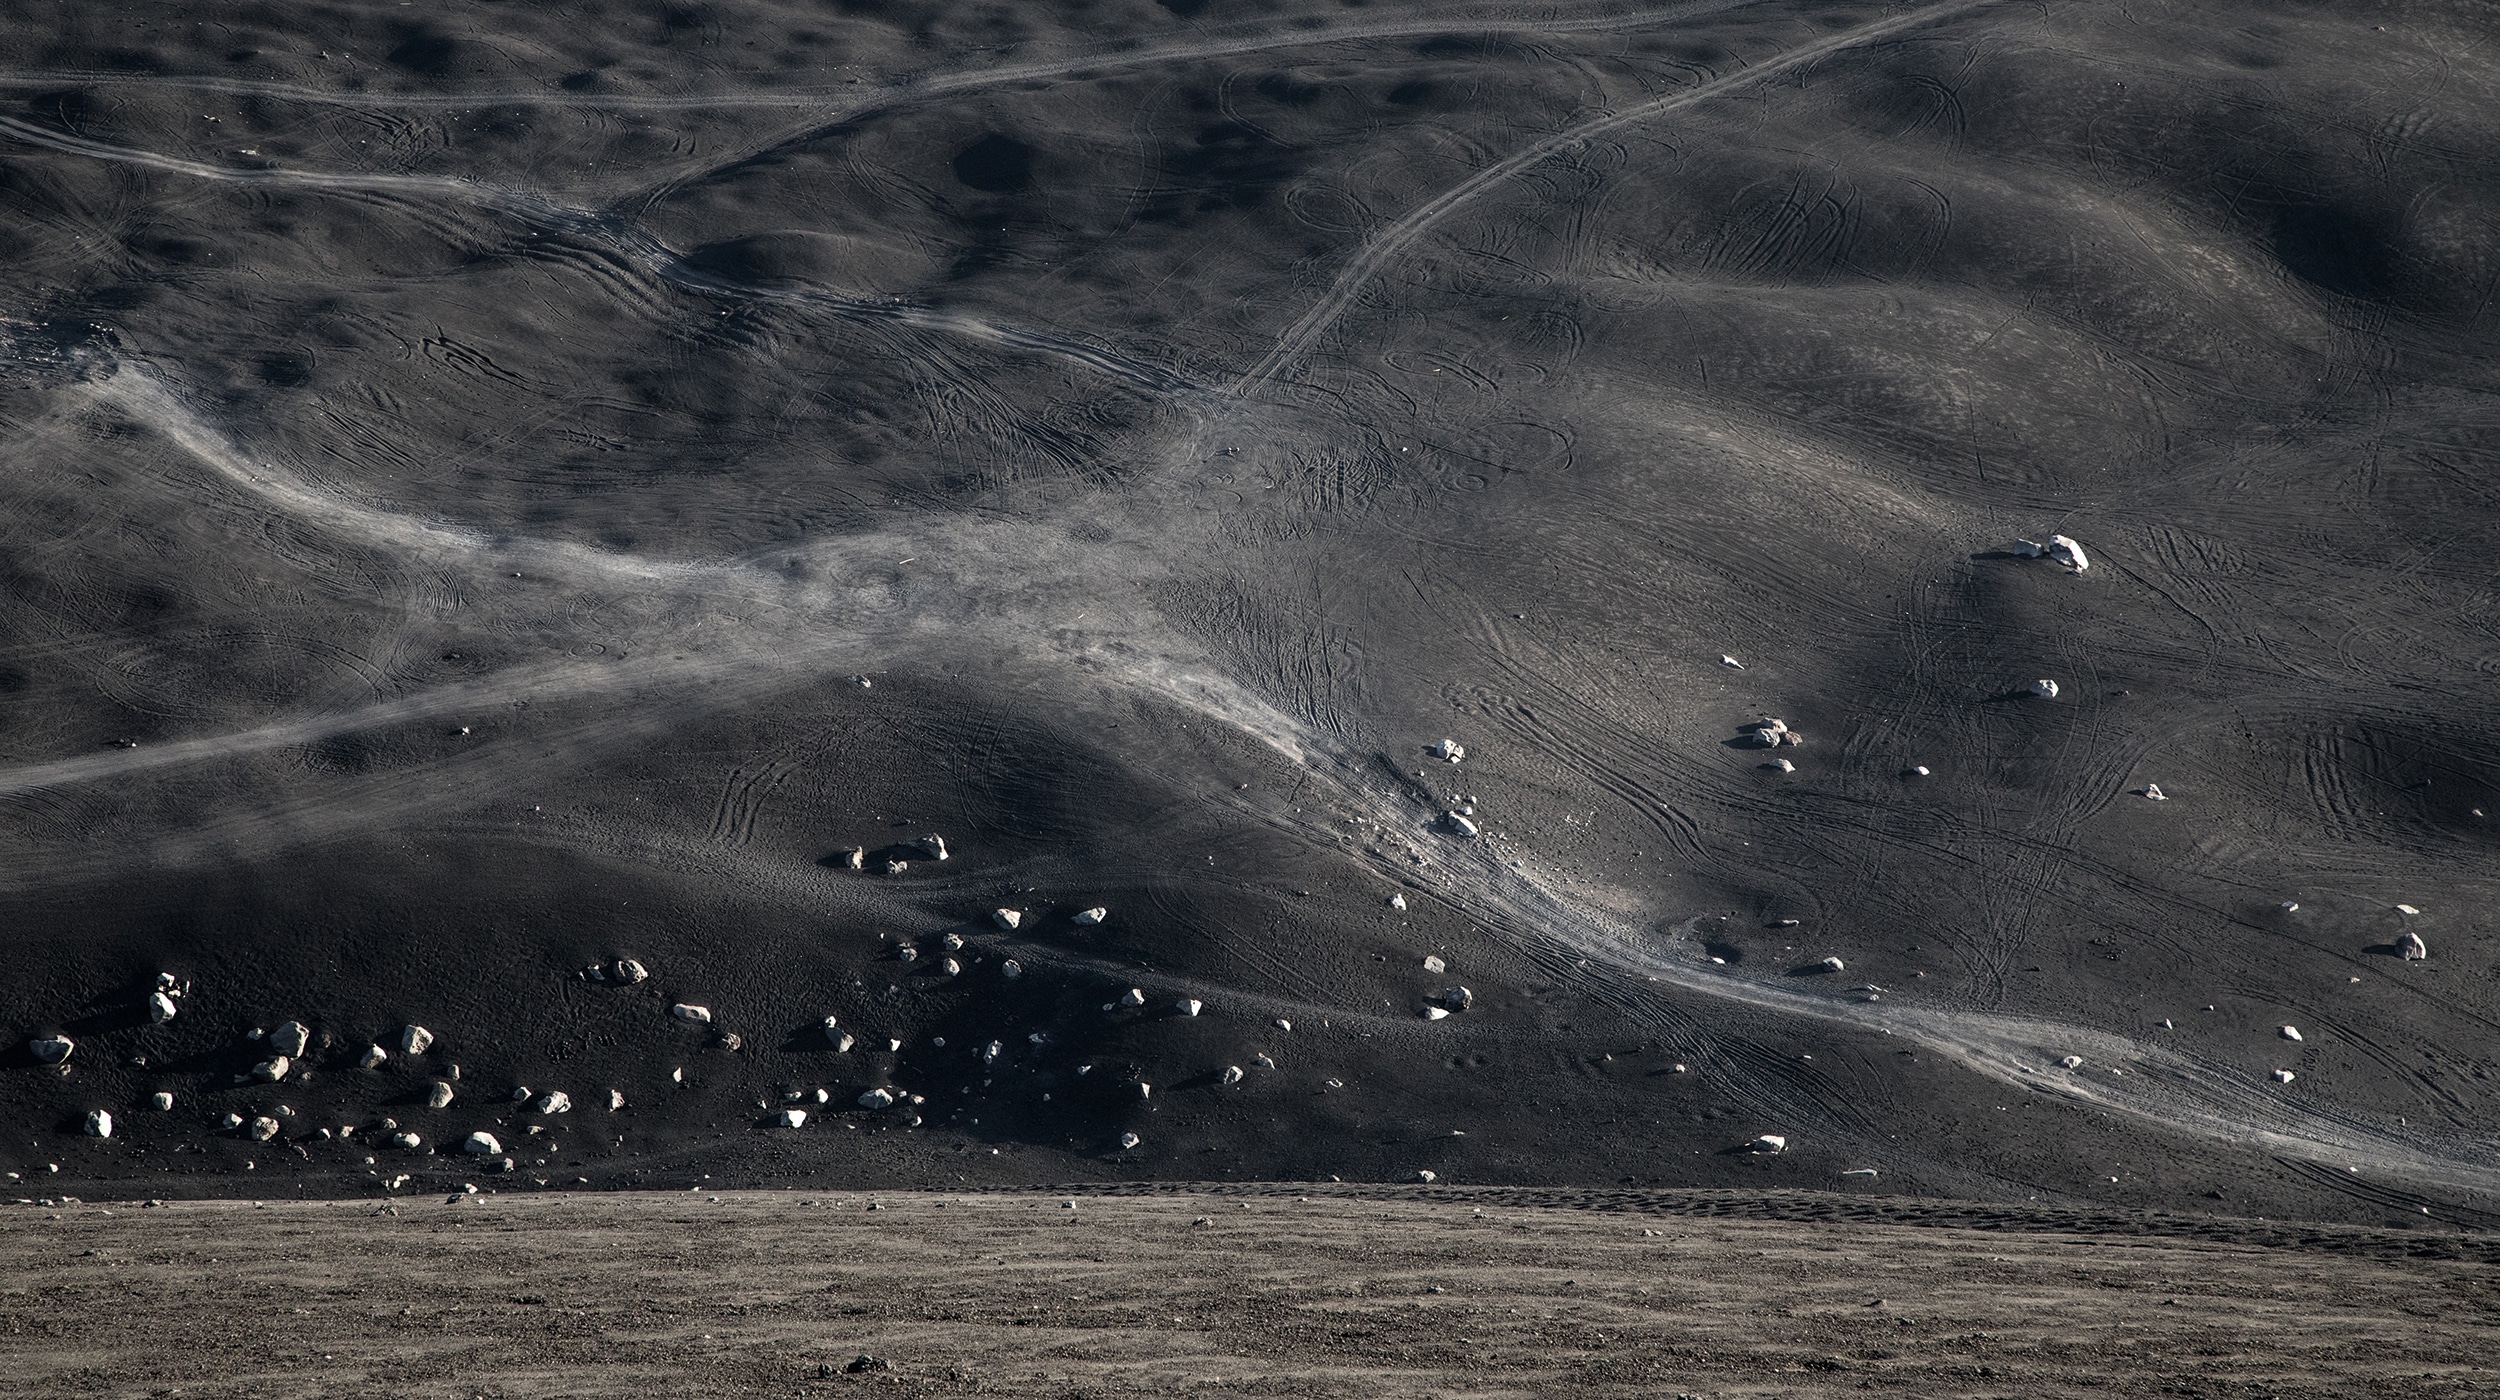 Foot of Cerro Negro. Image: Jamie Lafferty